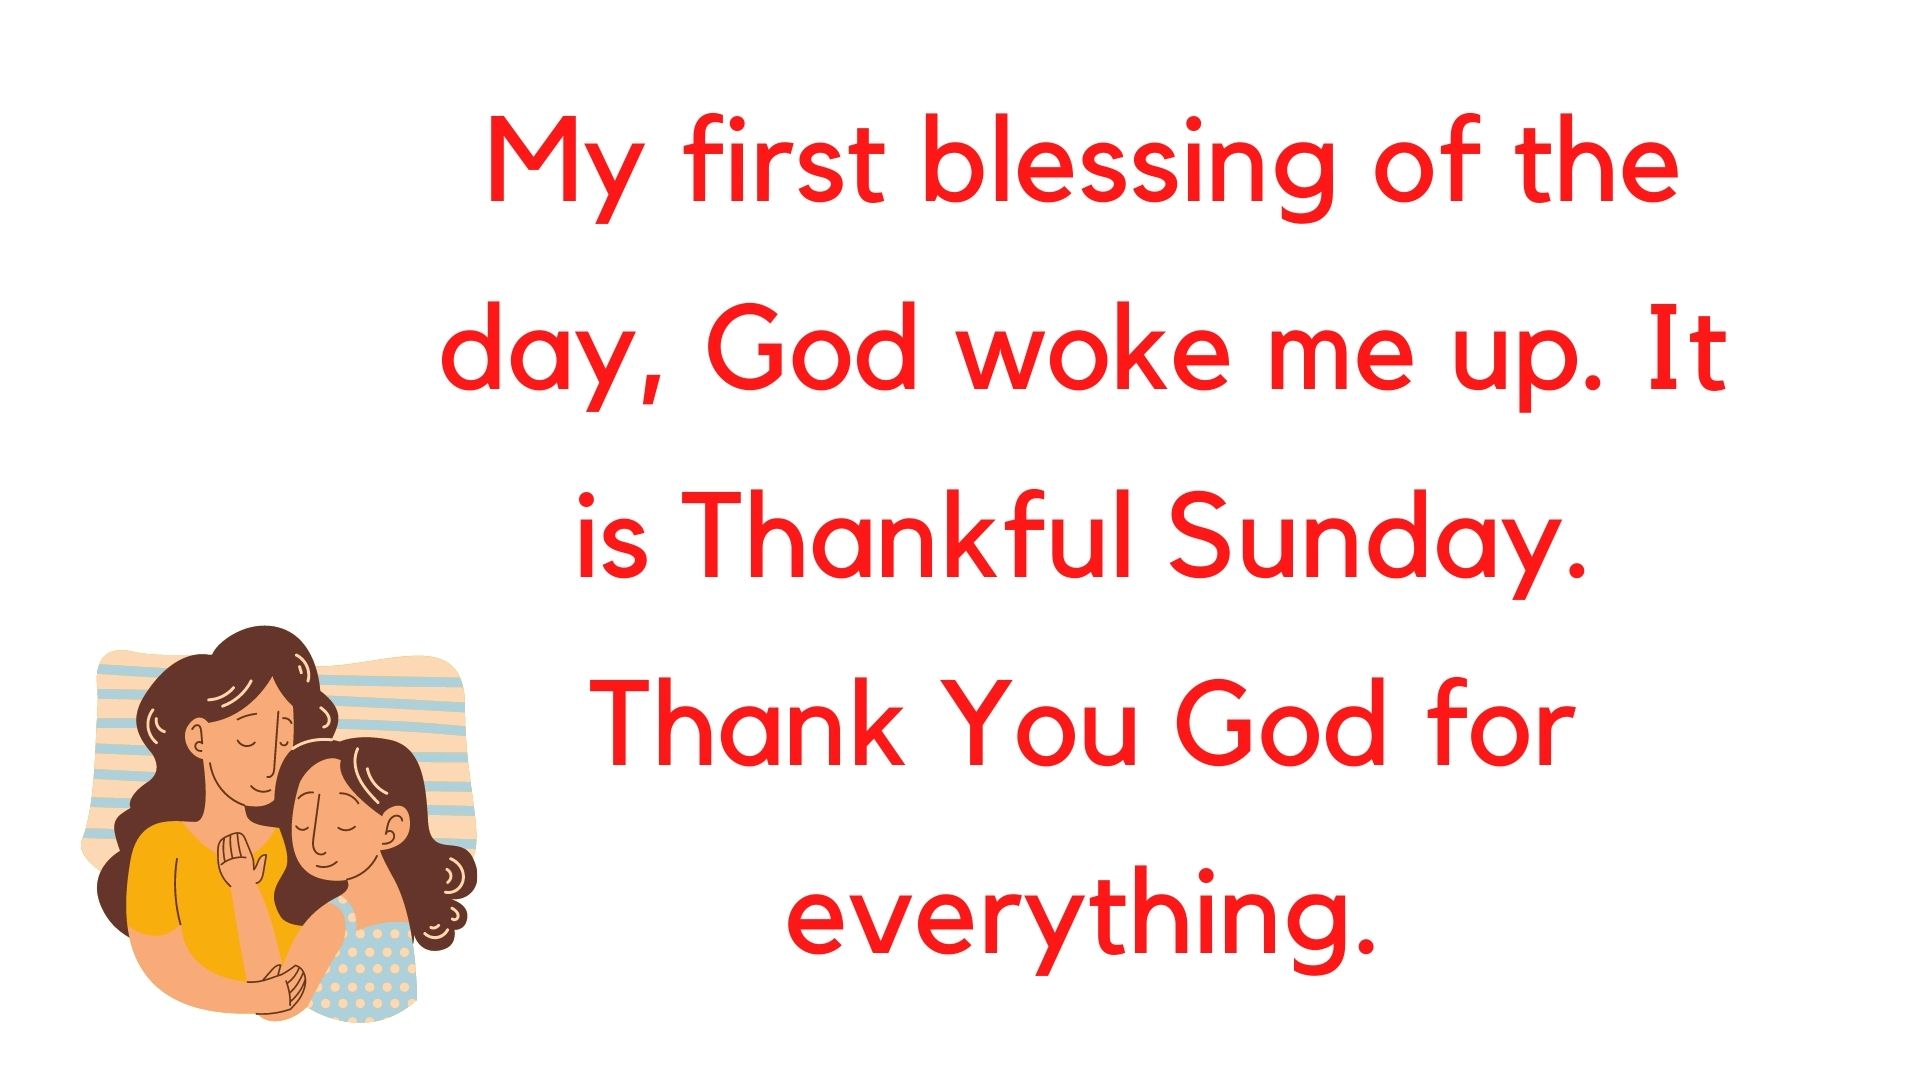 It is Thankful Sunday